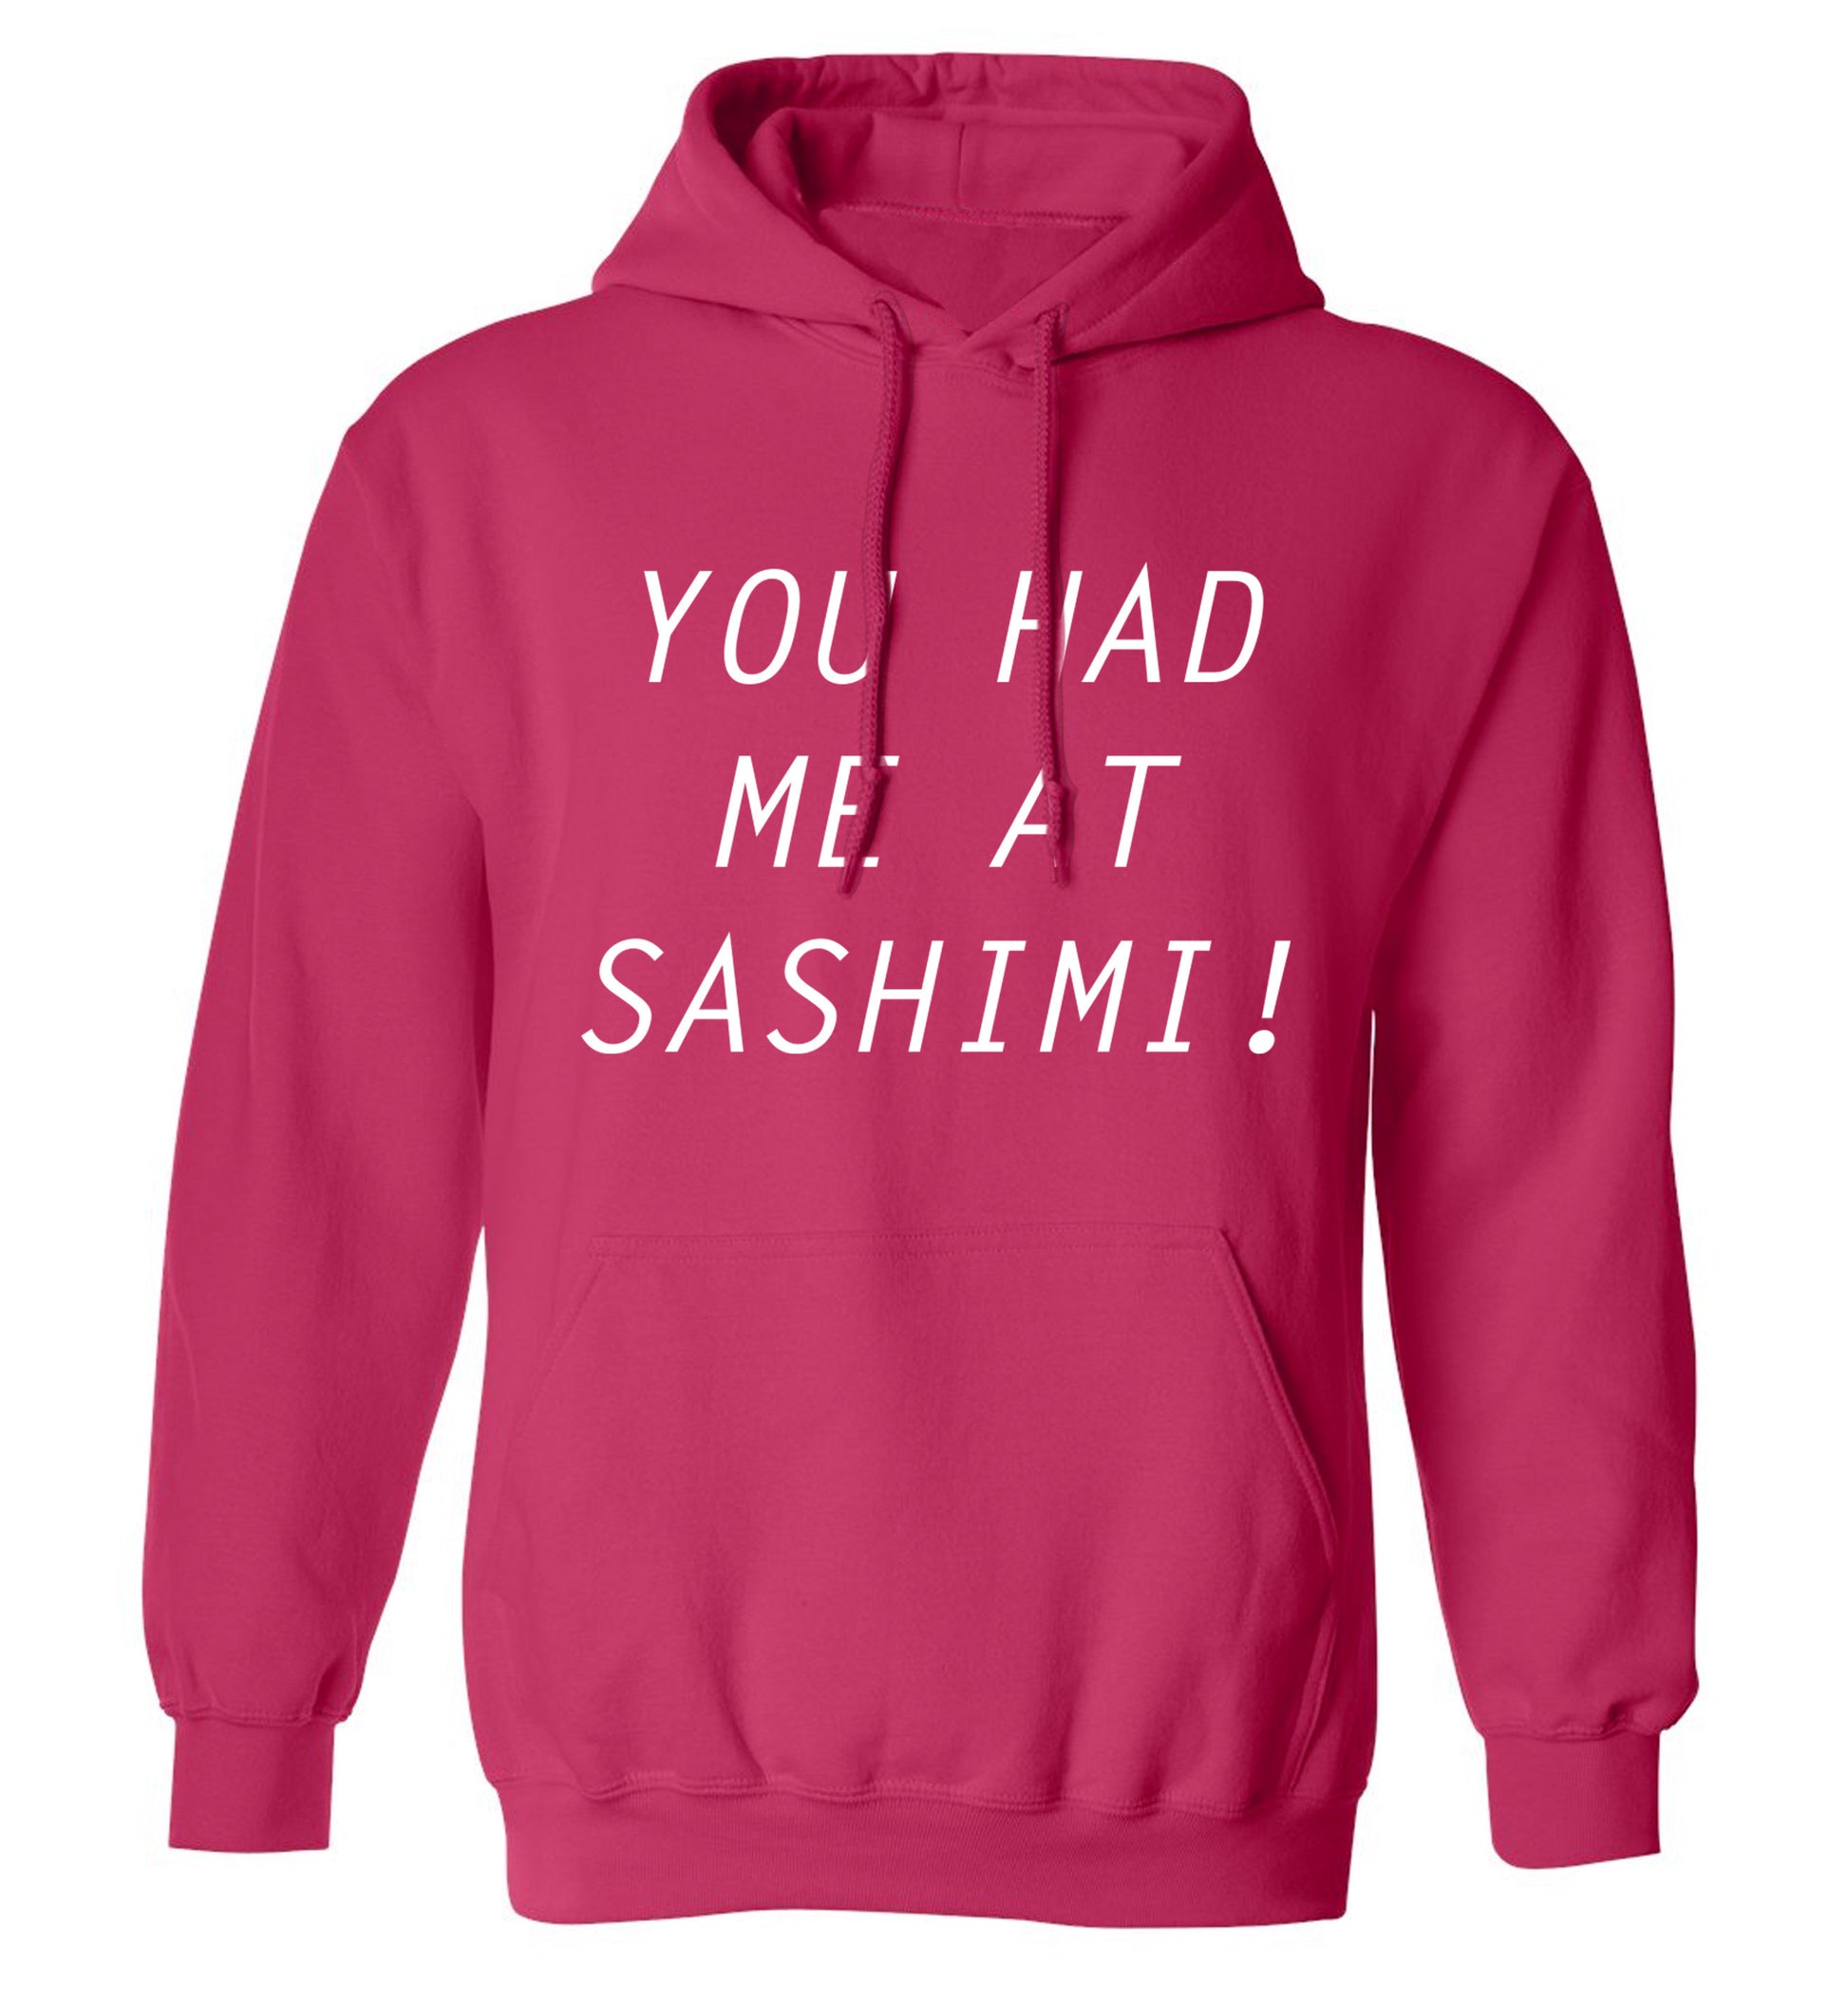 You had me at sashimi adults unisex pink hoodie 2XL